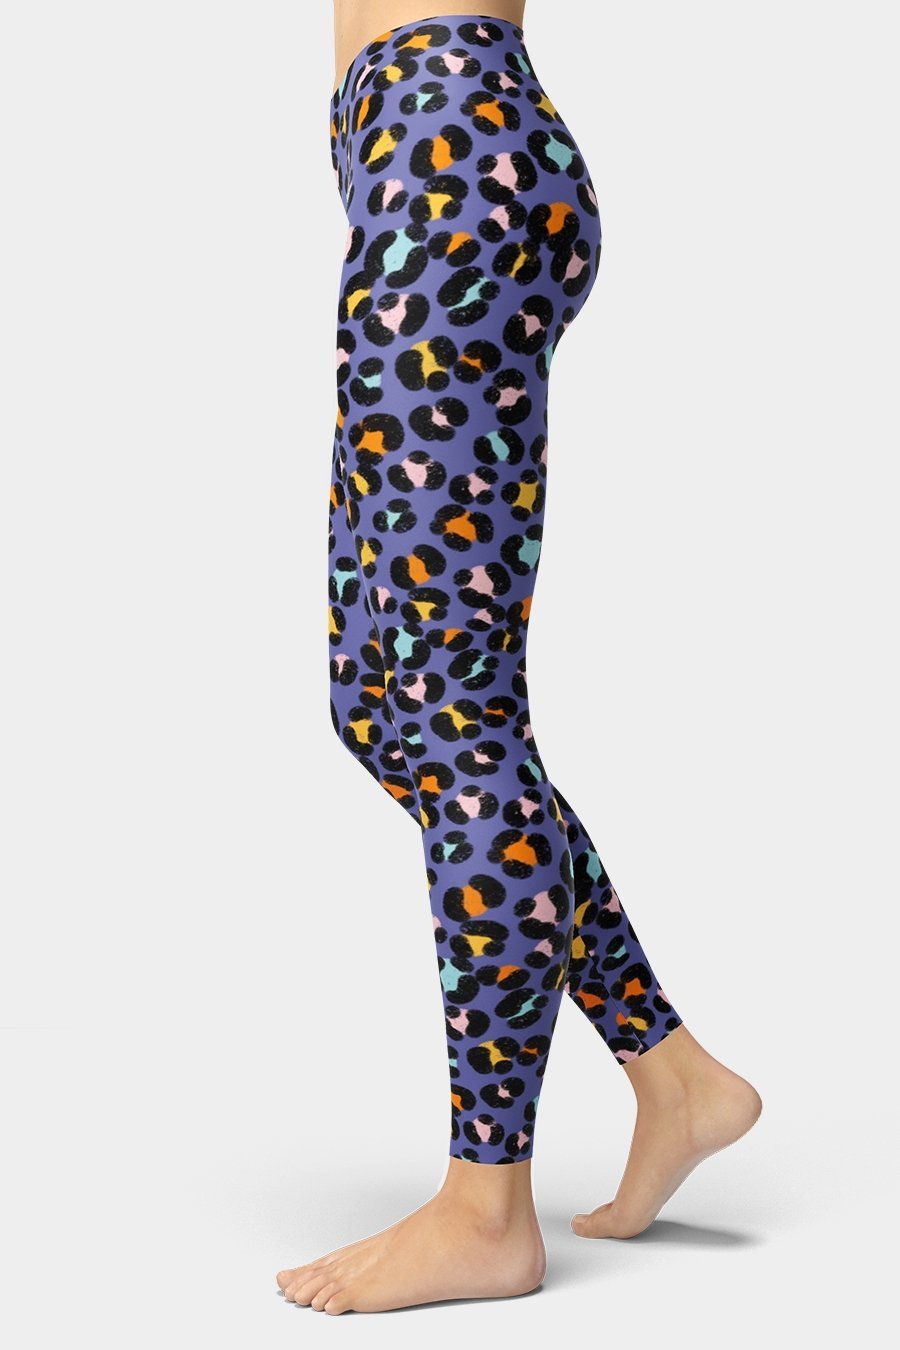 Color Leopard Leggings - SeeMyLeggings